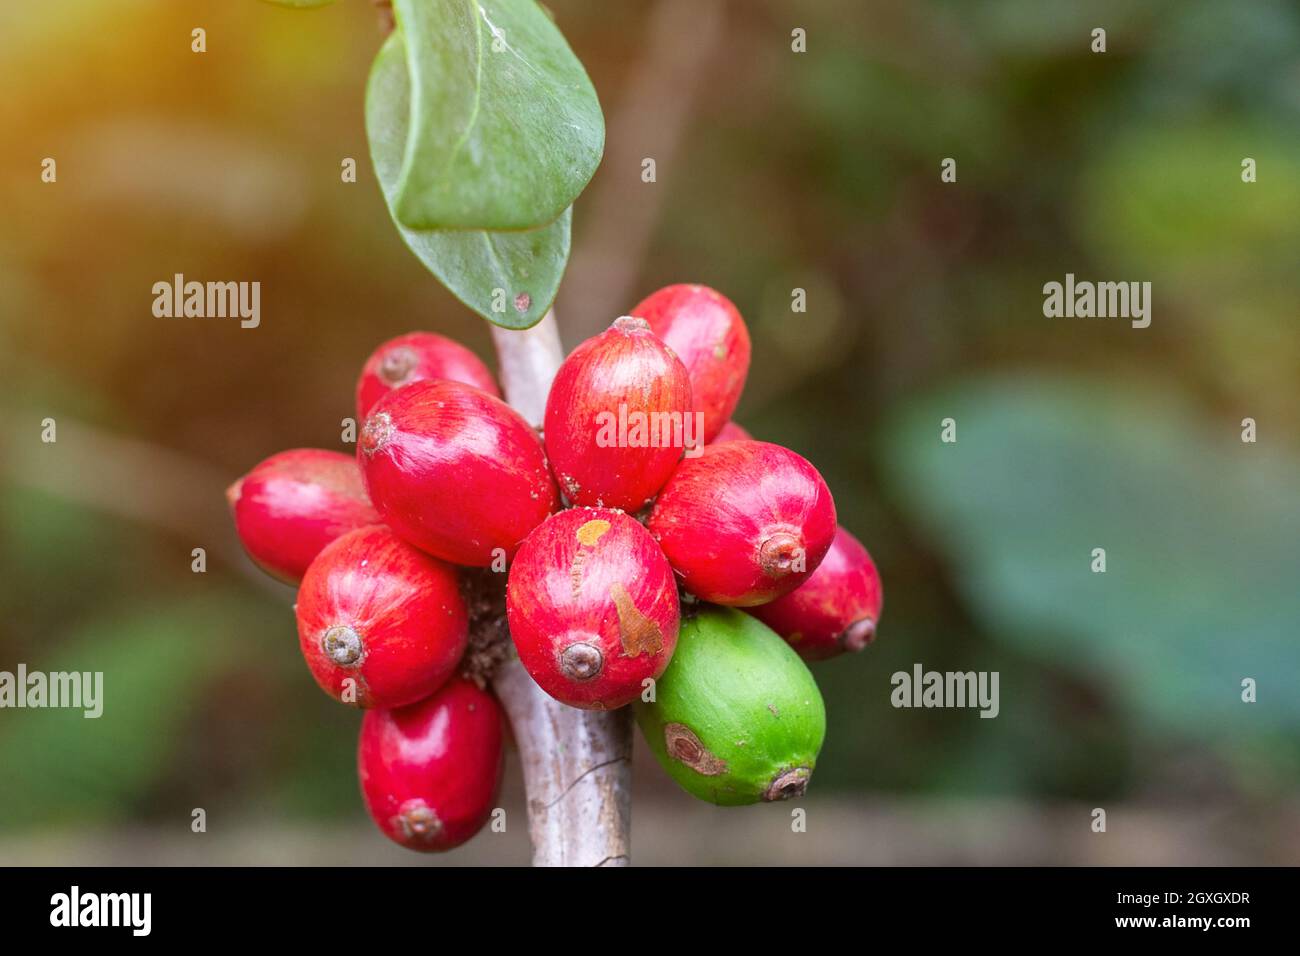 laos coffee,pakxong coffee fruits farming in asia Stock Photo